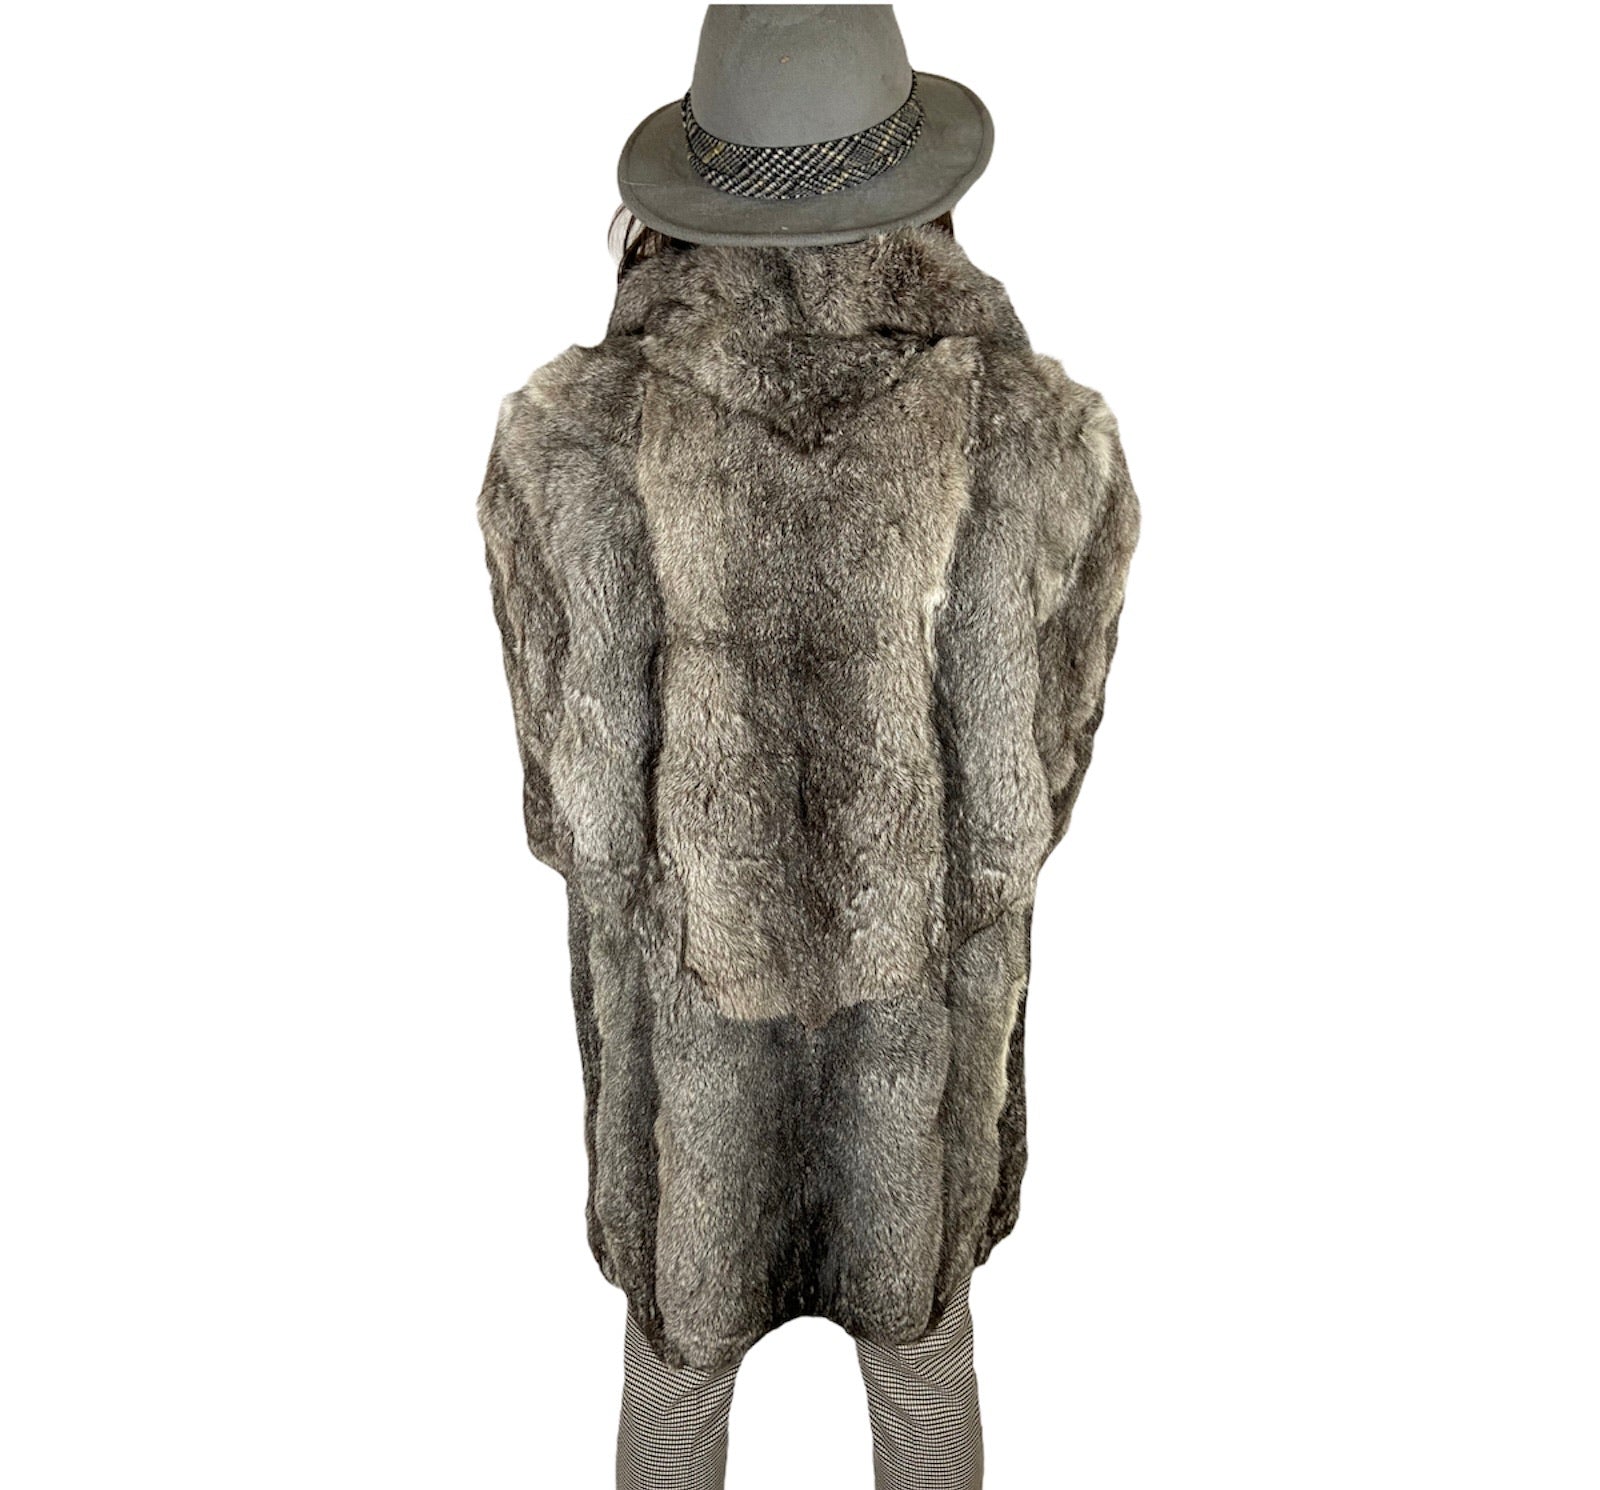 Vintage Real Rabbit Fur Coat With Beautiful Lining Size: Large Women’s / Small-Medium Men’s